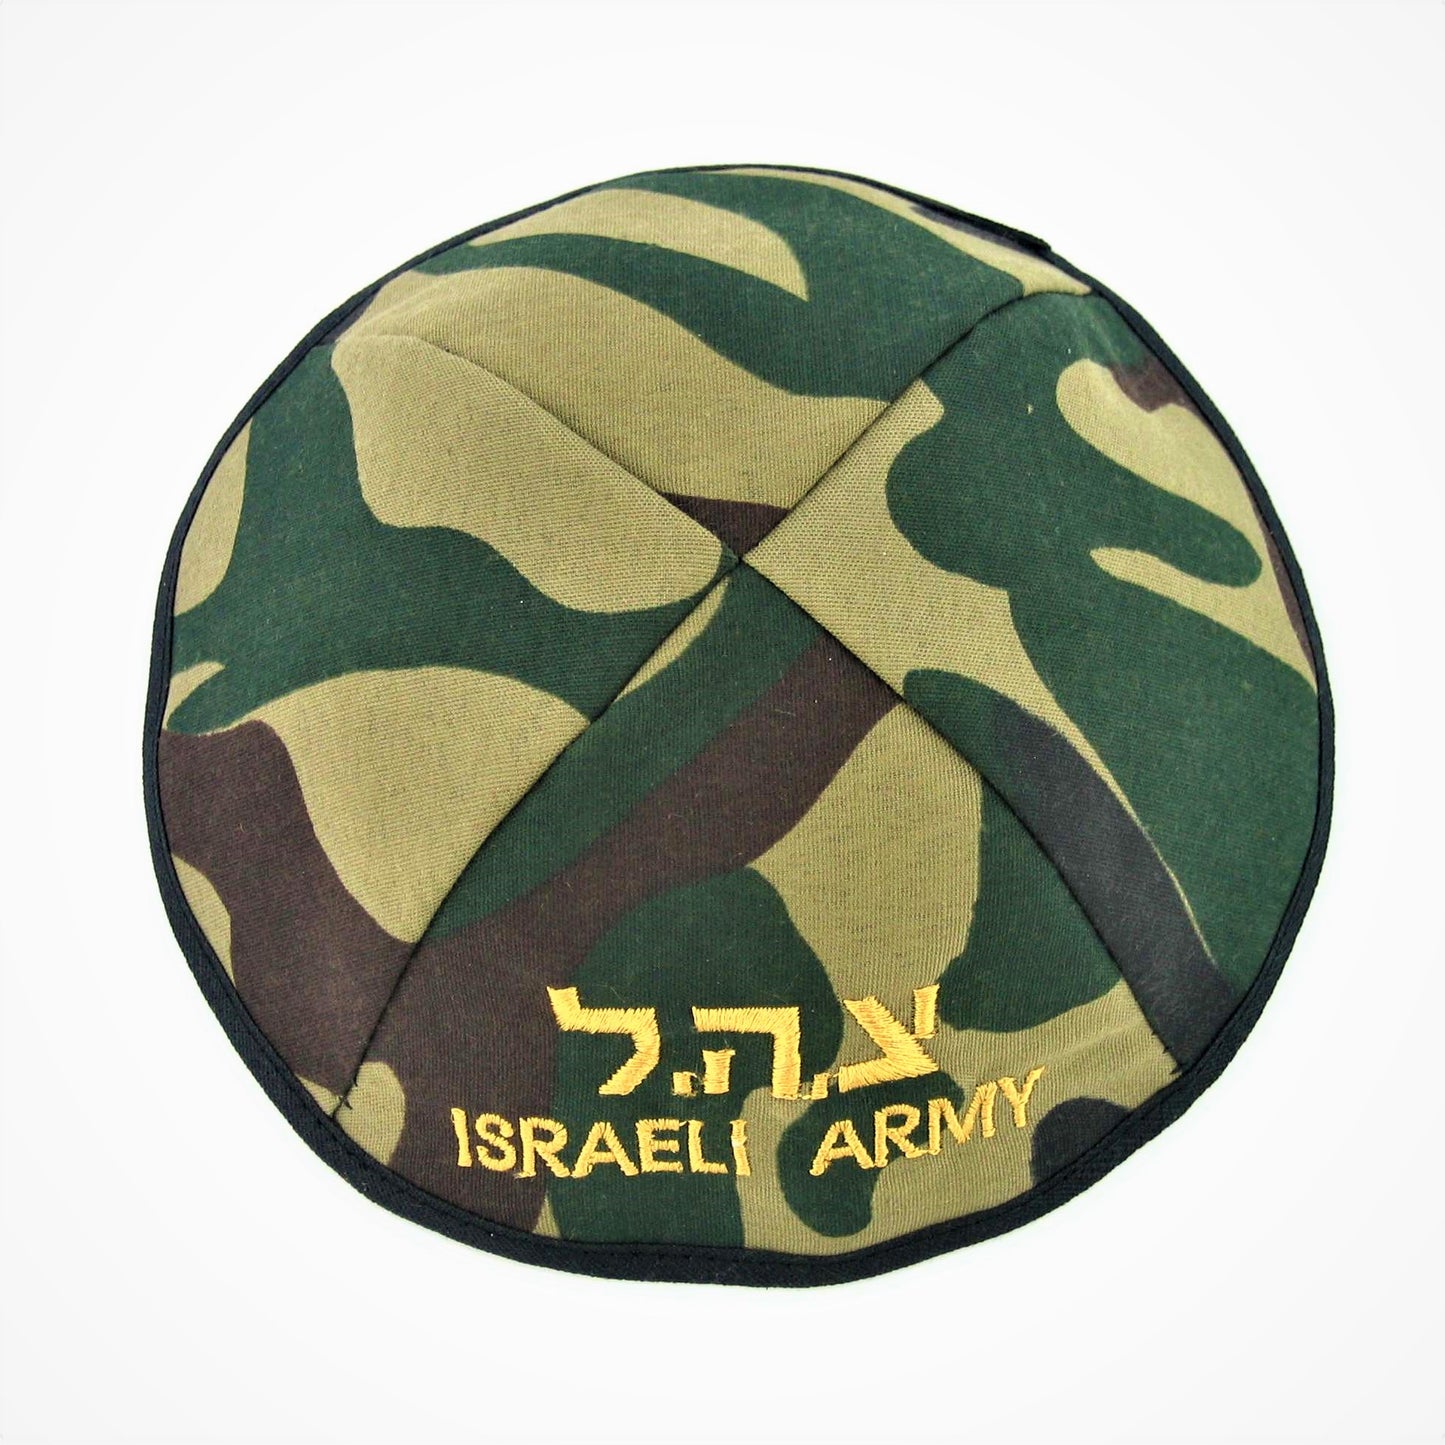 kipá tela Israel army verde camuflaje 10149